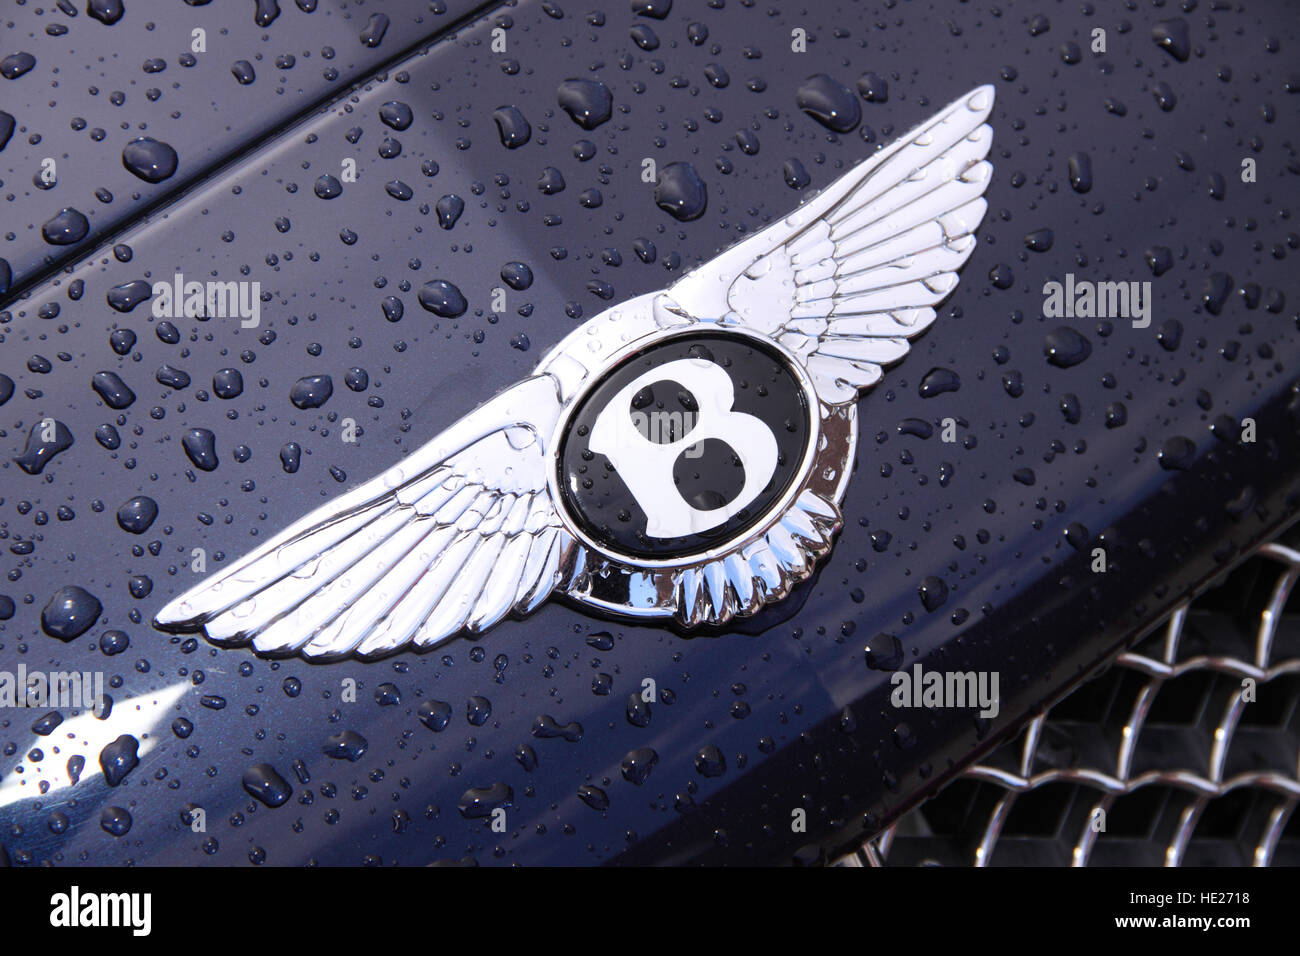 Fichier:Bentley badge and hood ornament.jpg — Wikilivres